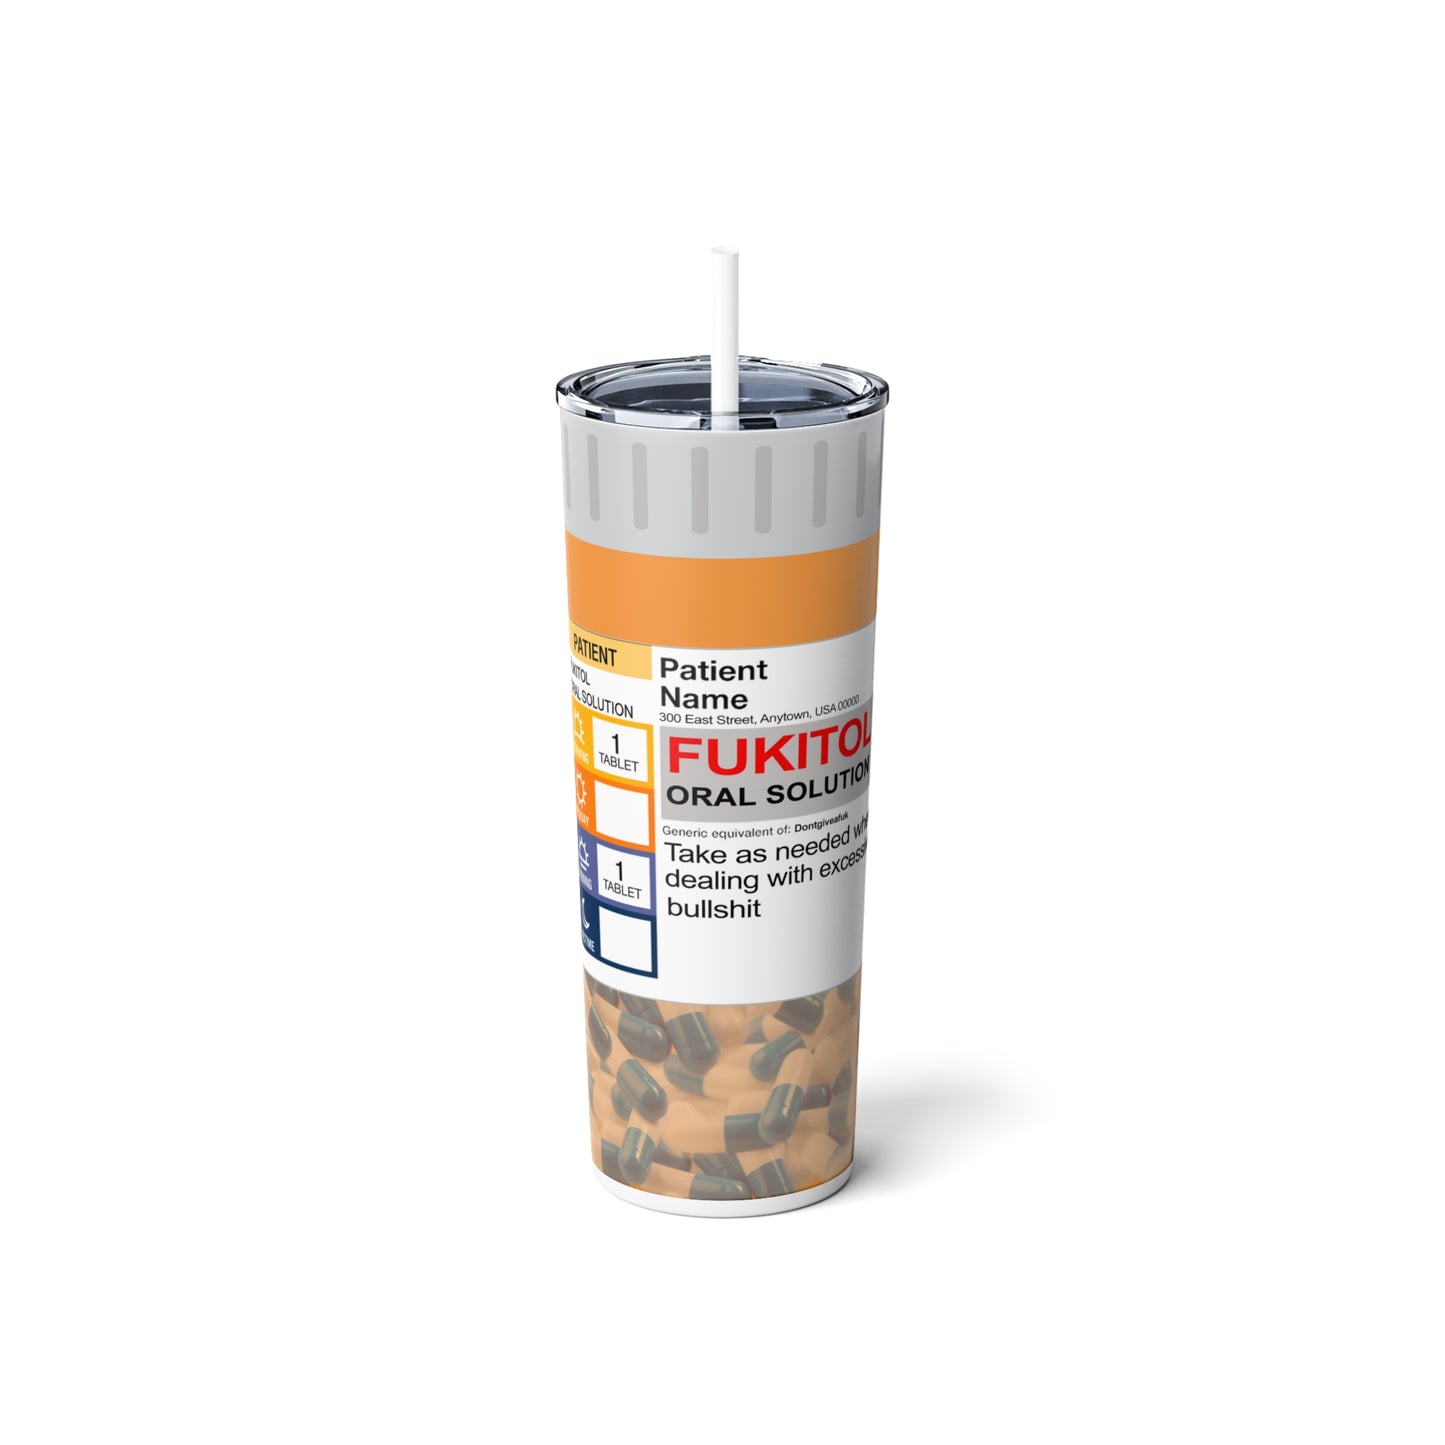 Fukitol Prescription Skinny Steel Tumbler with Straw, 20oz